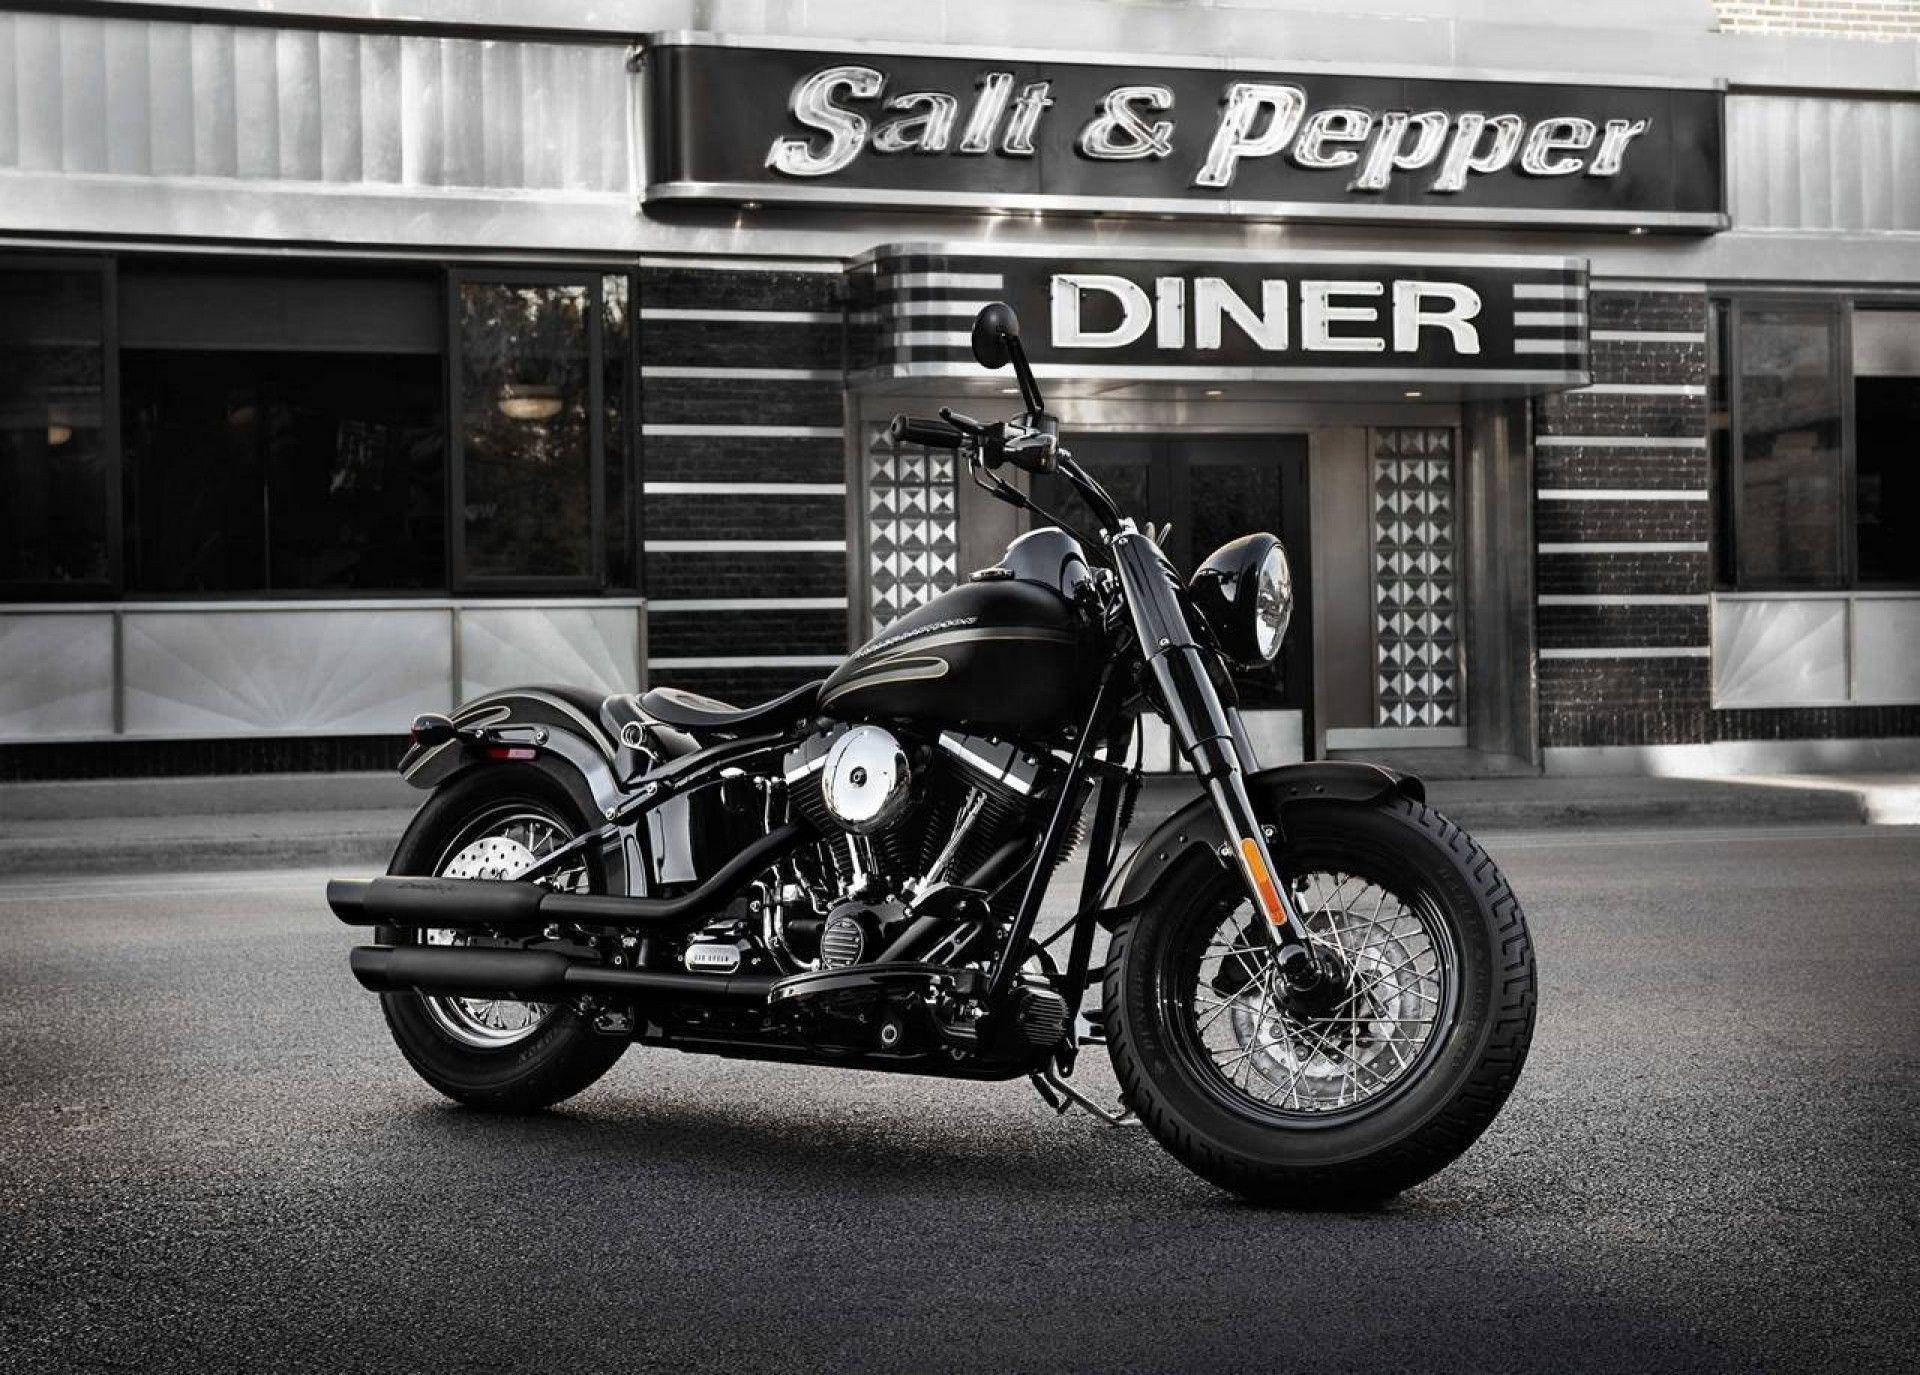 Harley Davidson Outside The Restaurant Background